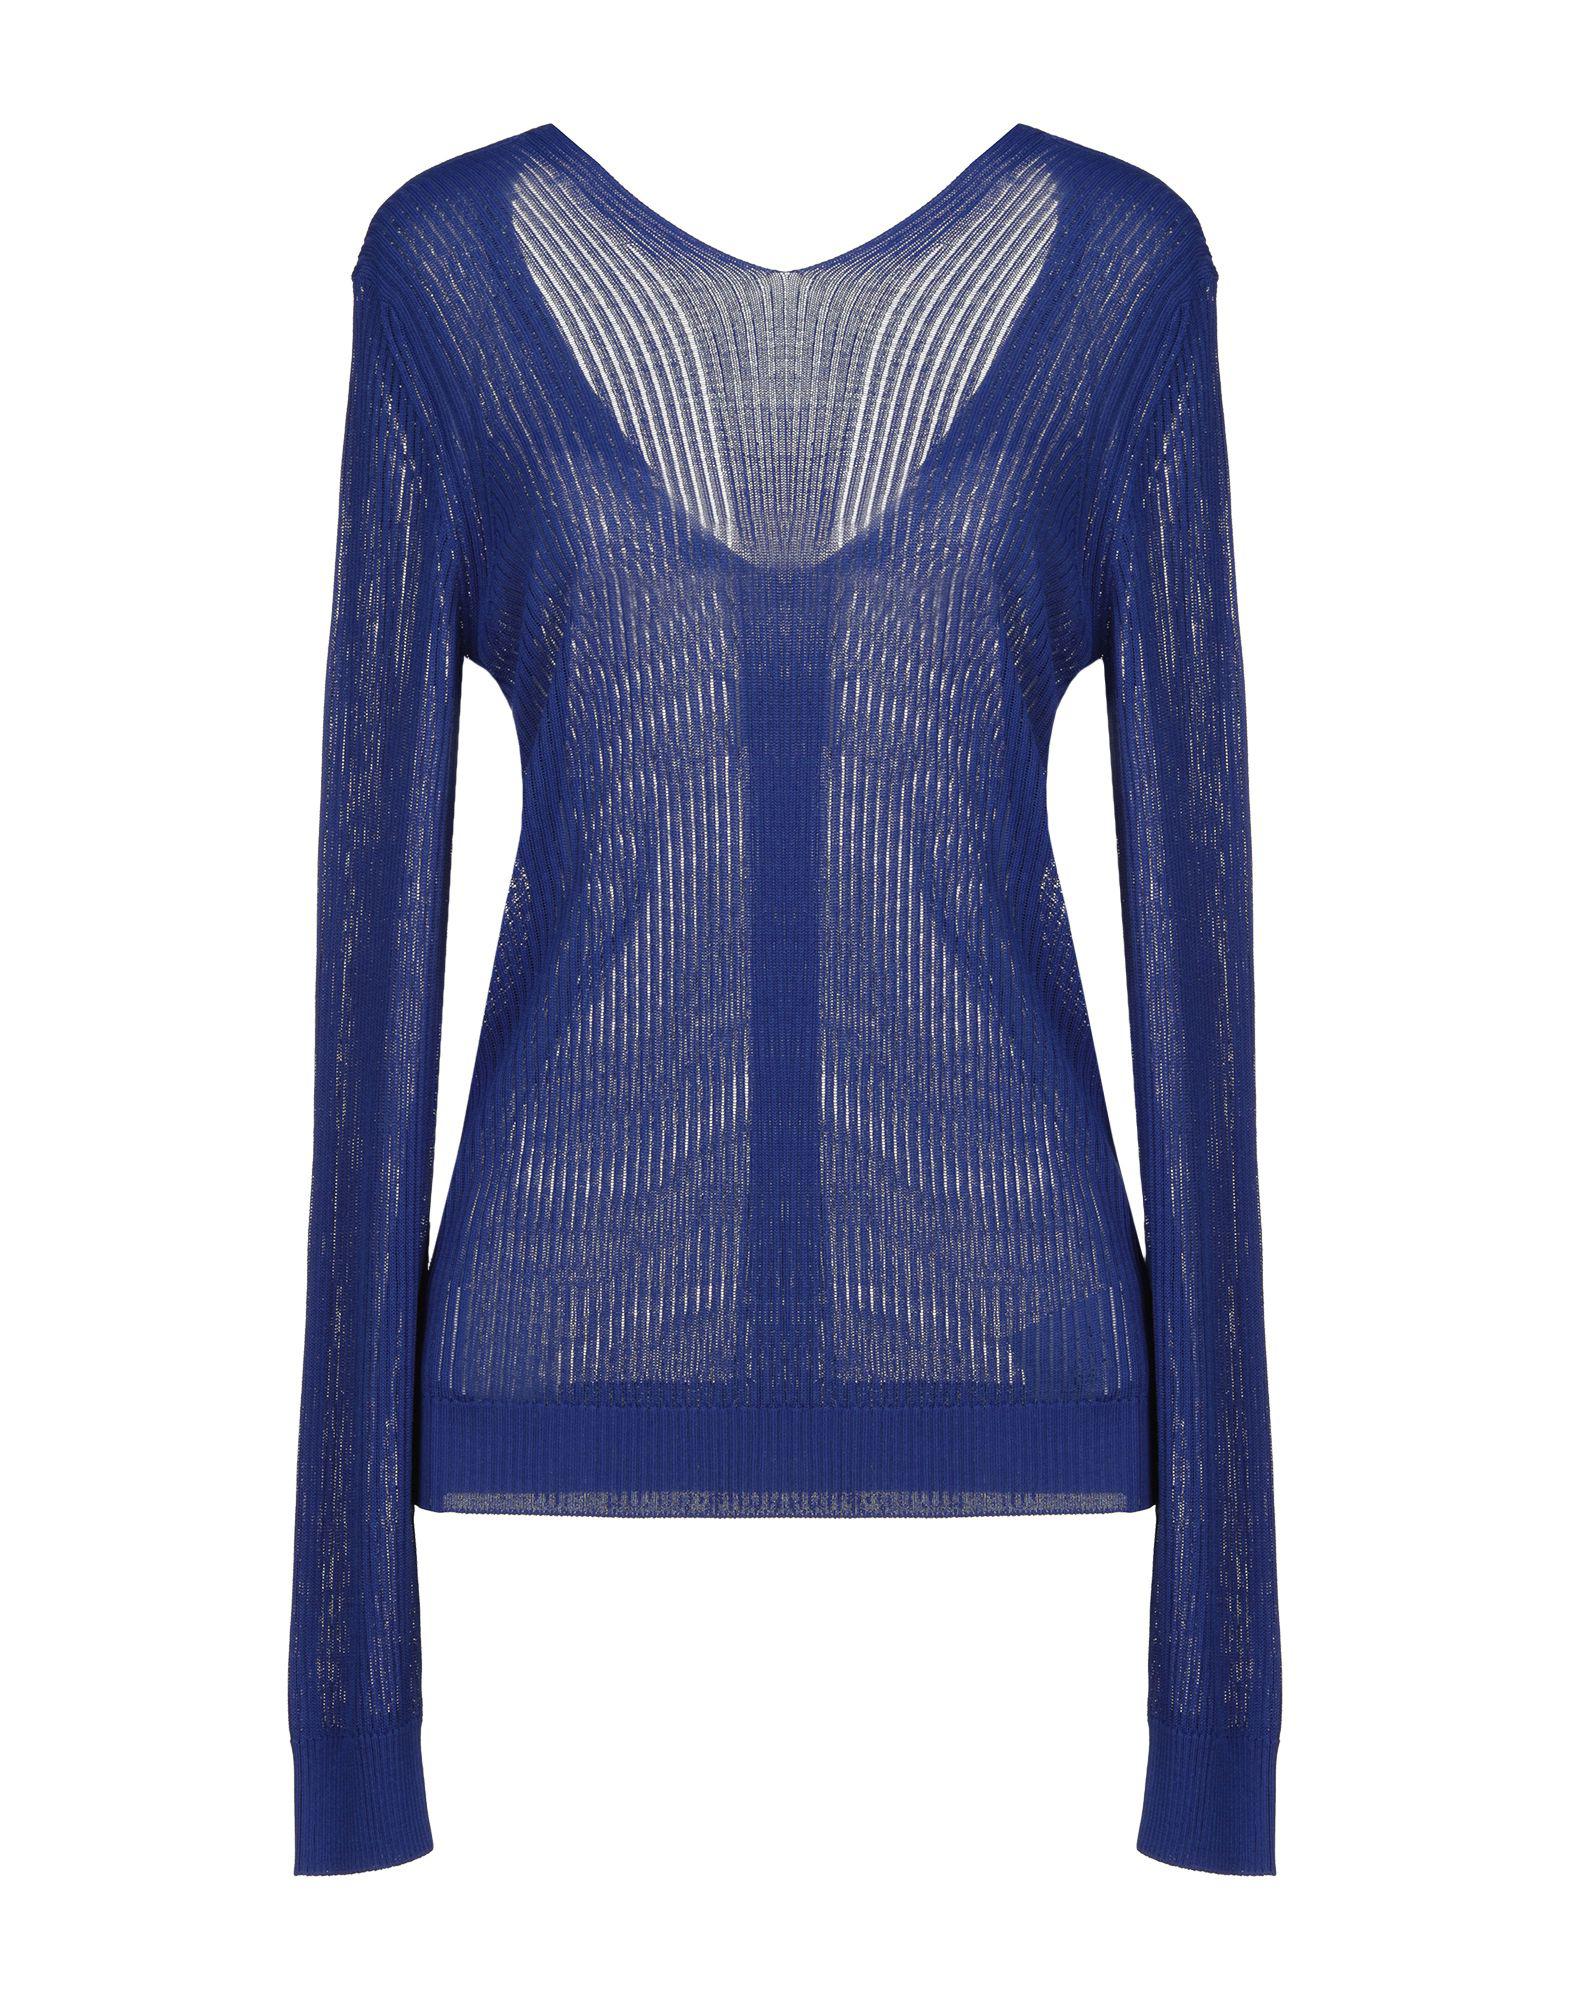 Maison Margiela Sweater in Bright Blue (Blue) - Lyst